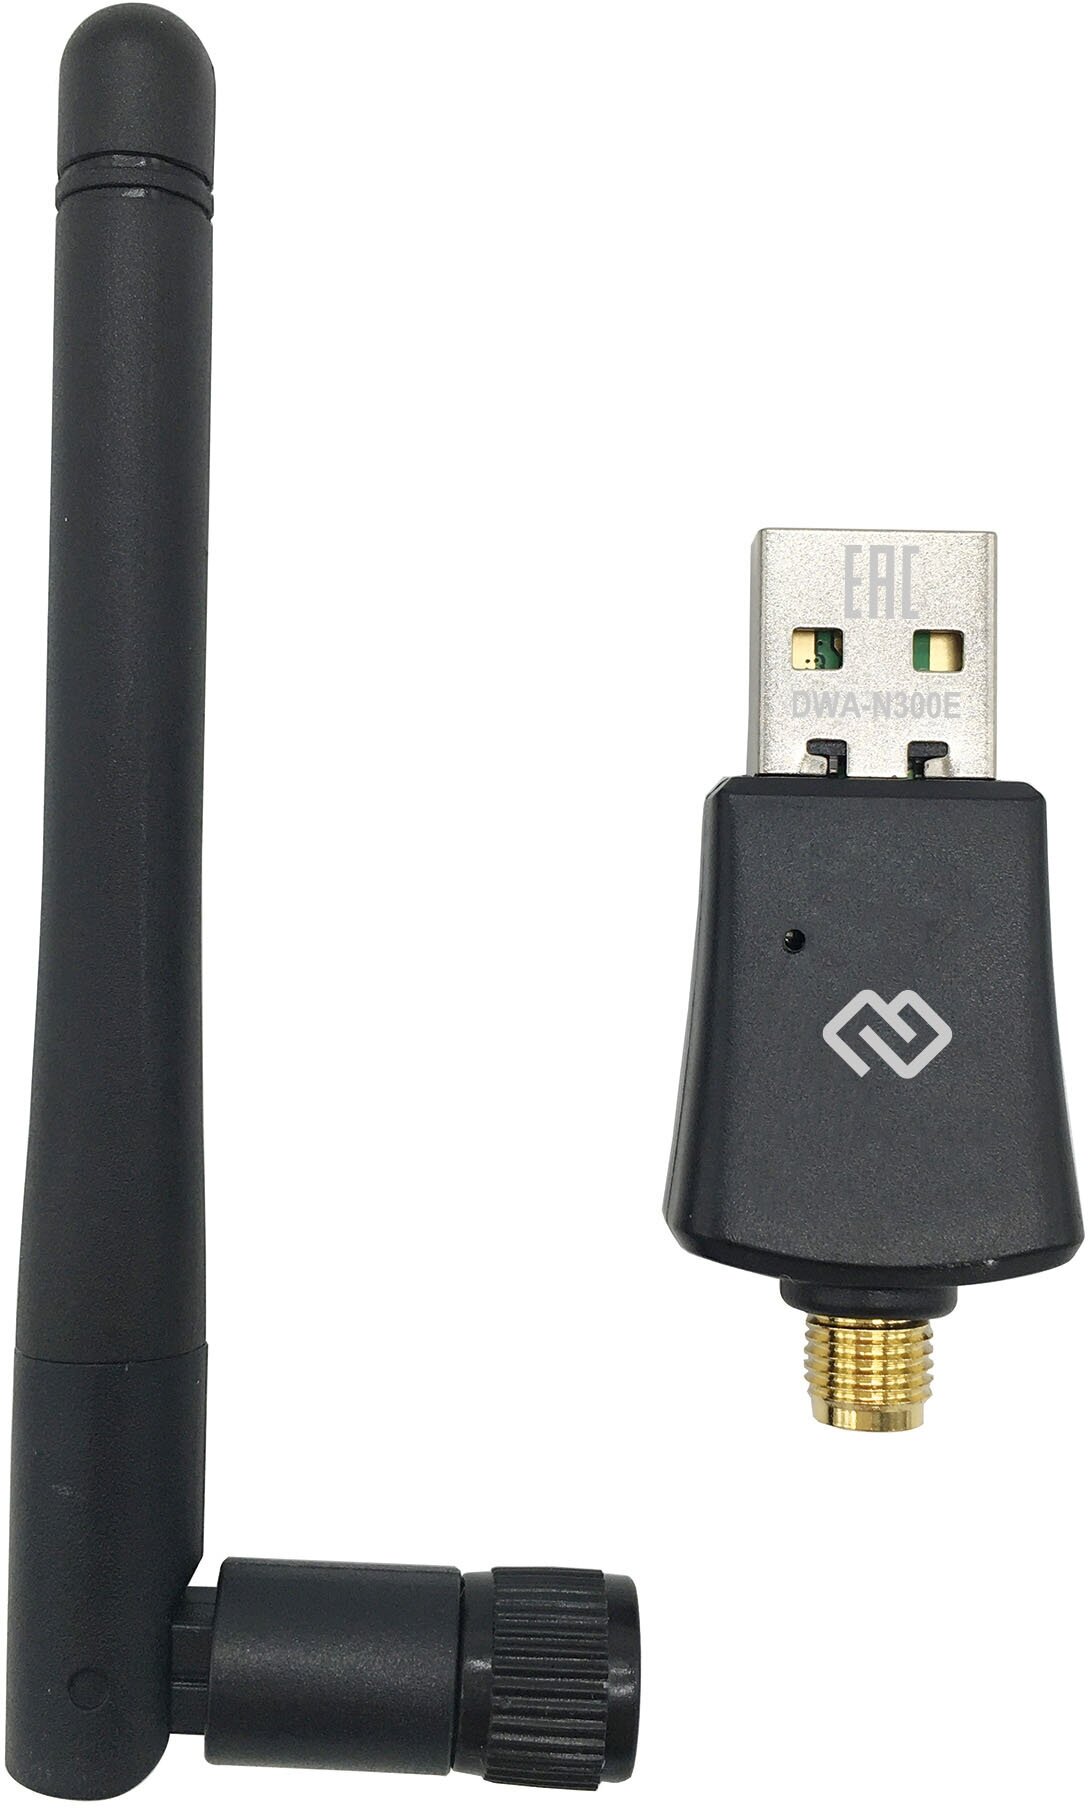 Сетевой адаптер WiFi Digma DWA-N300E N300 USB 2.0 ант.внеш.съем 1ант. упак.1шт